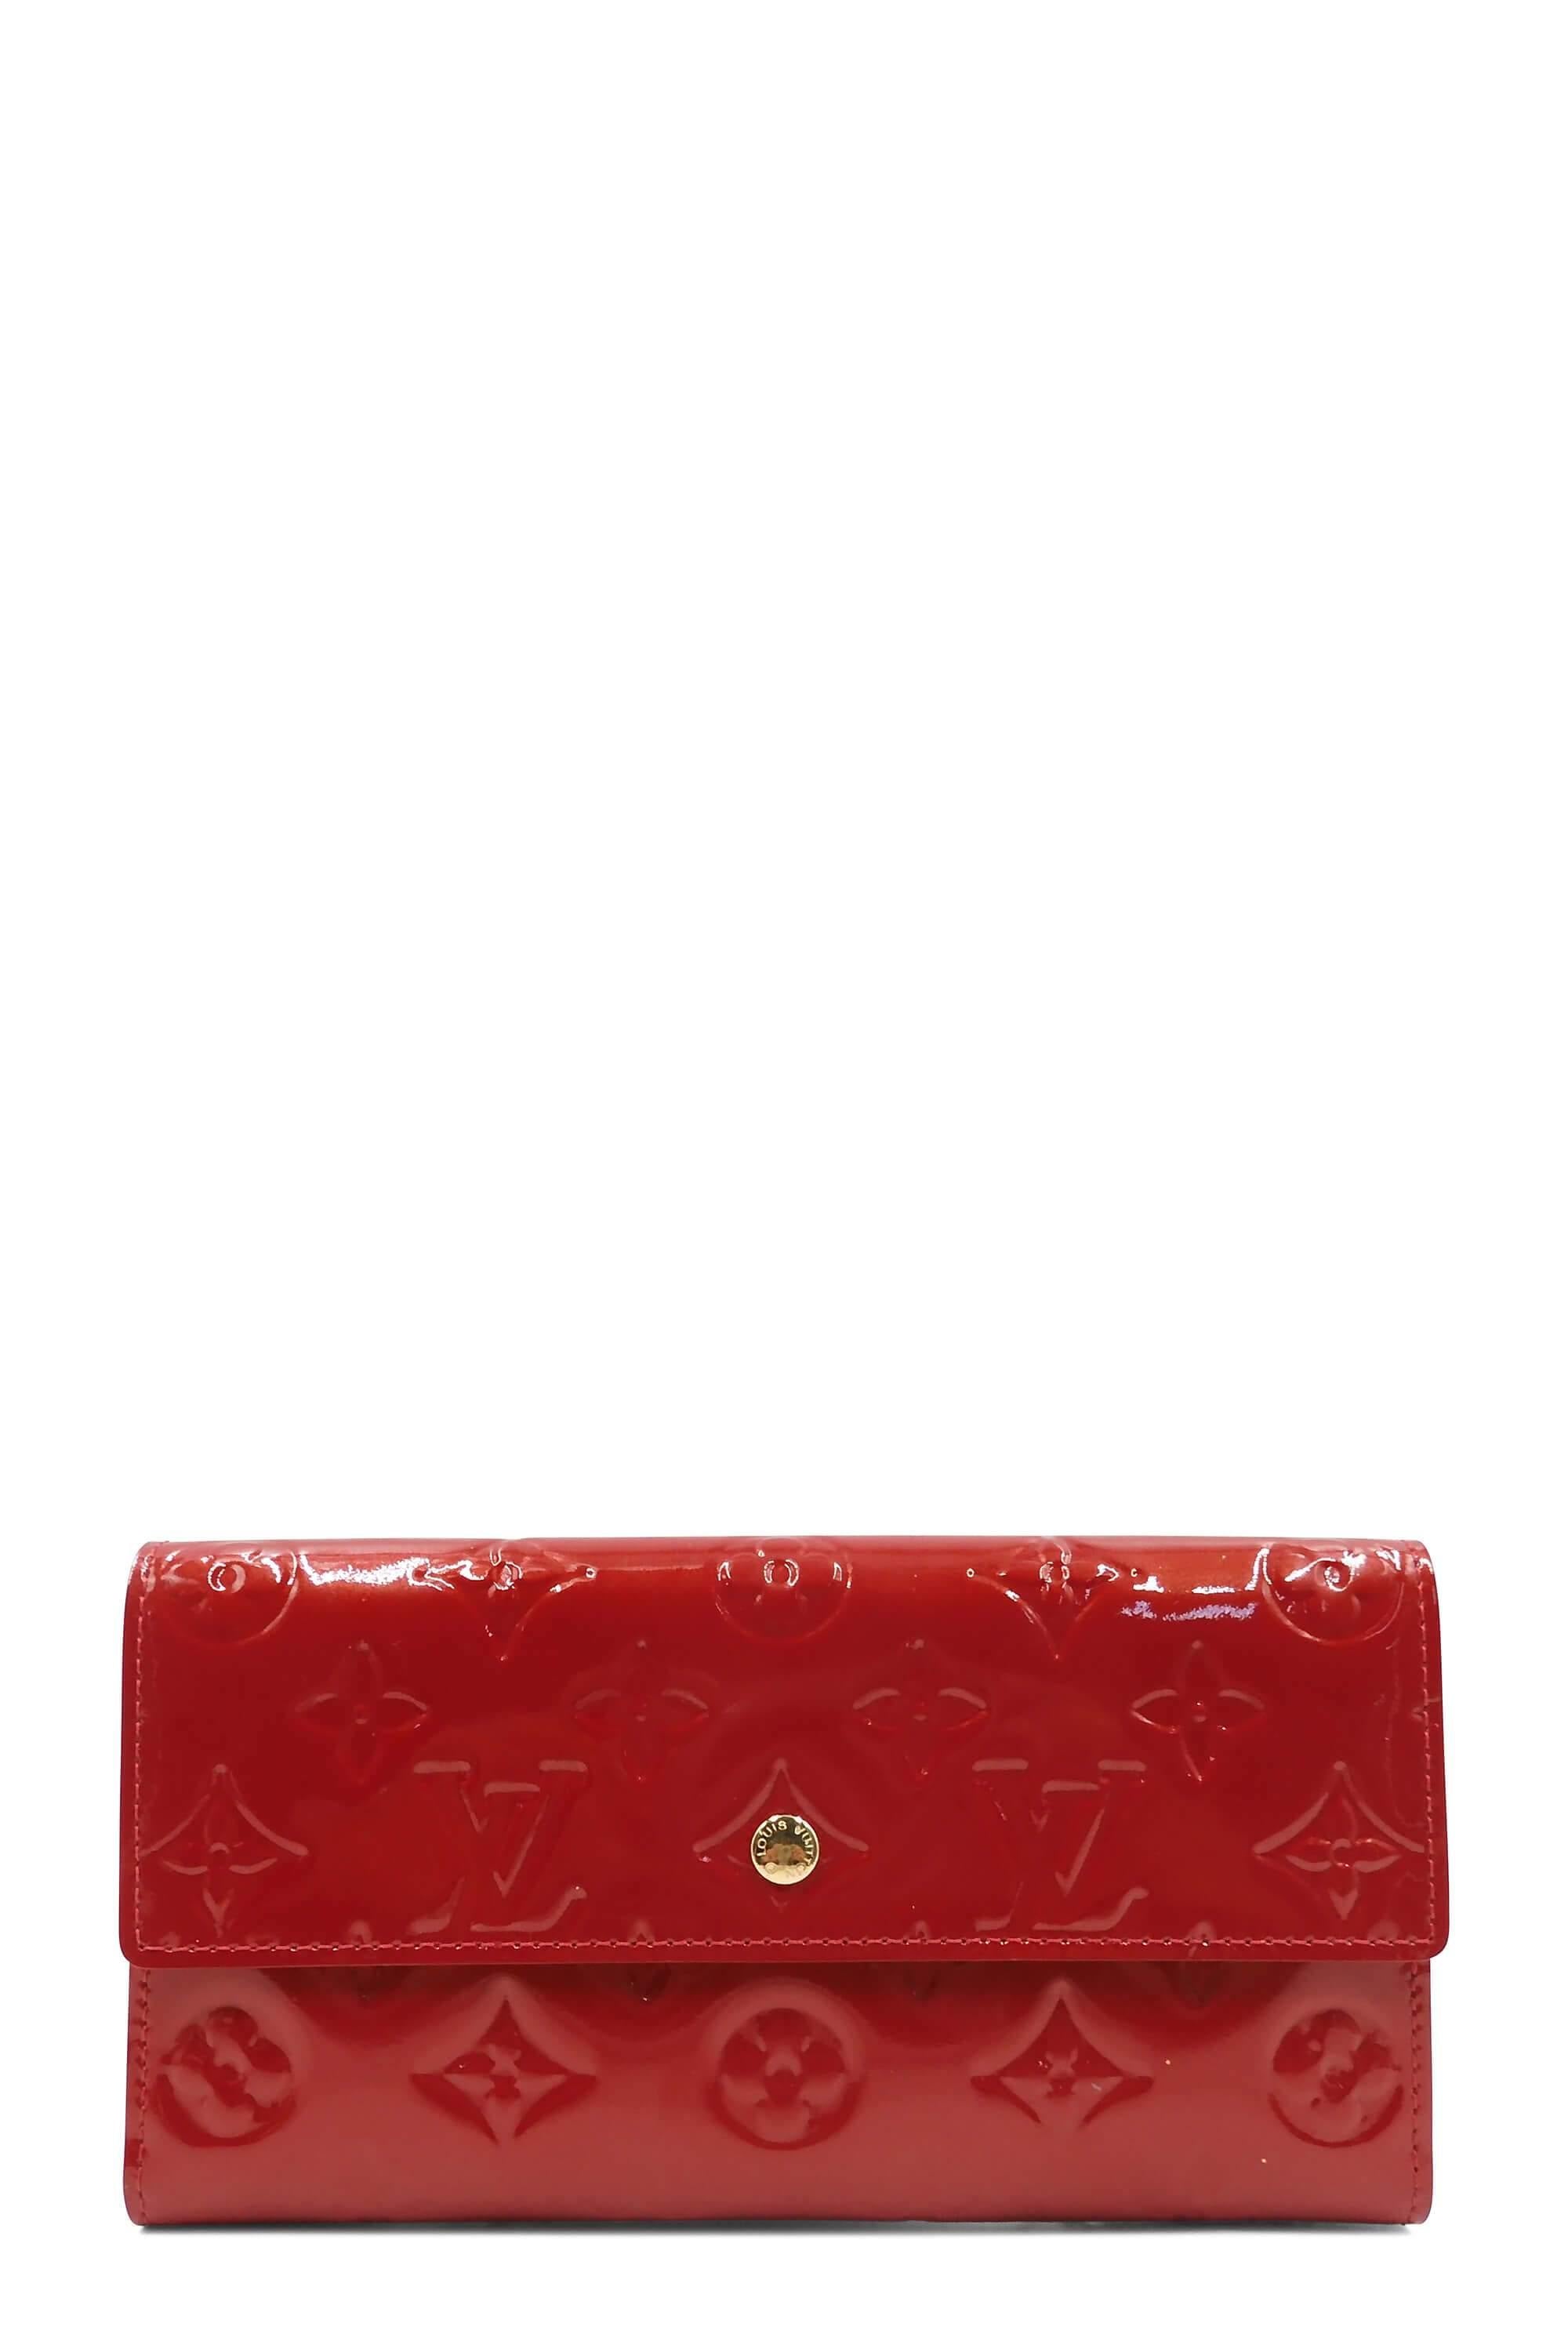 Louis Vuitton Sarah Cream Monogram Vernis Leather Wallet